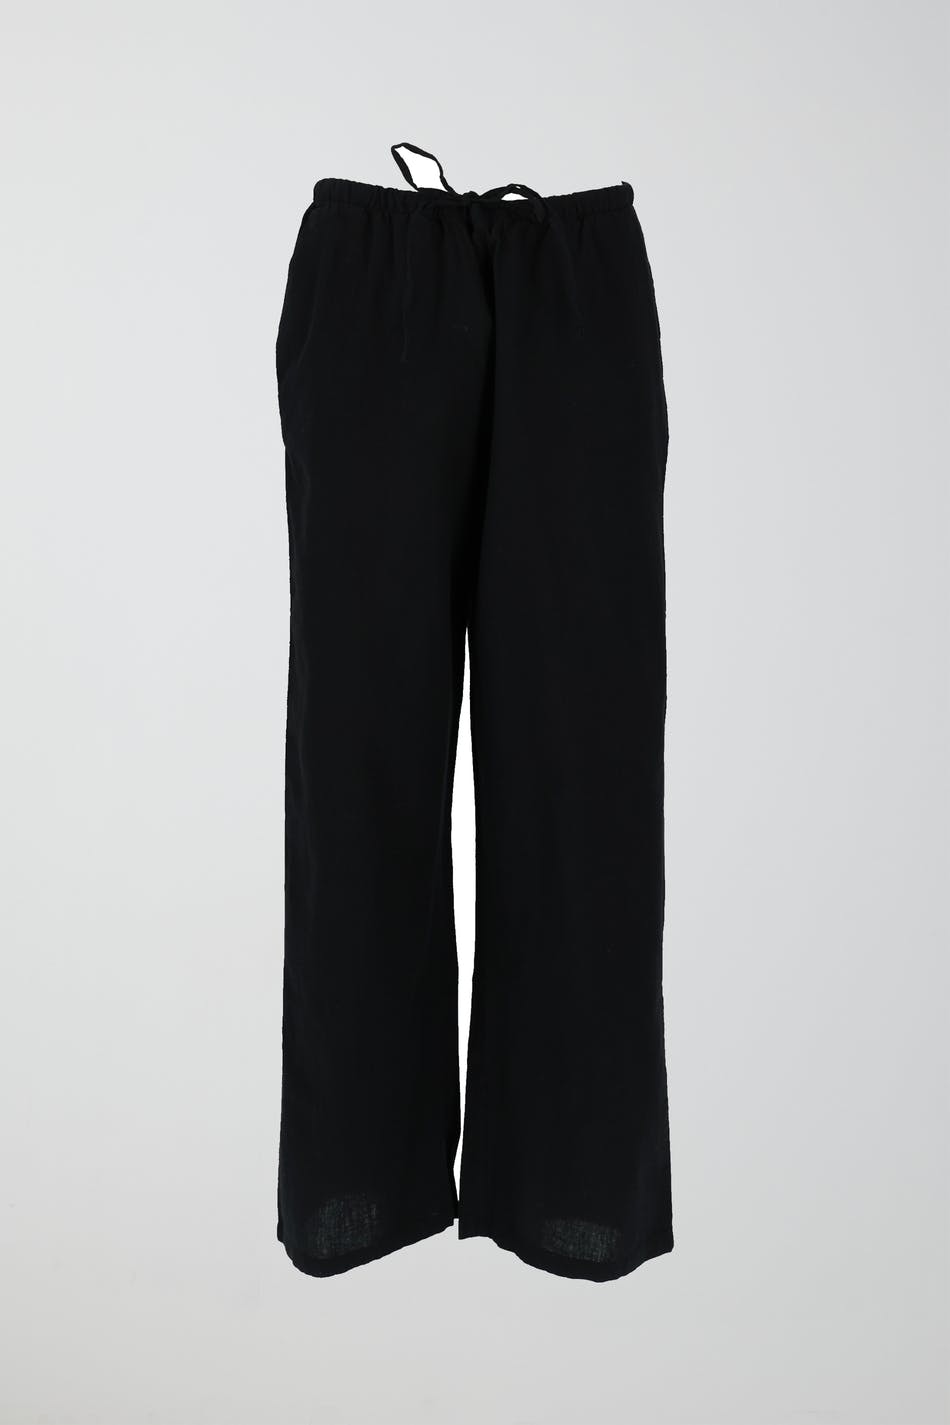 Gina Tricot - Tall linen blend trousers - linnebyxor - Black - S - Female